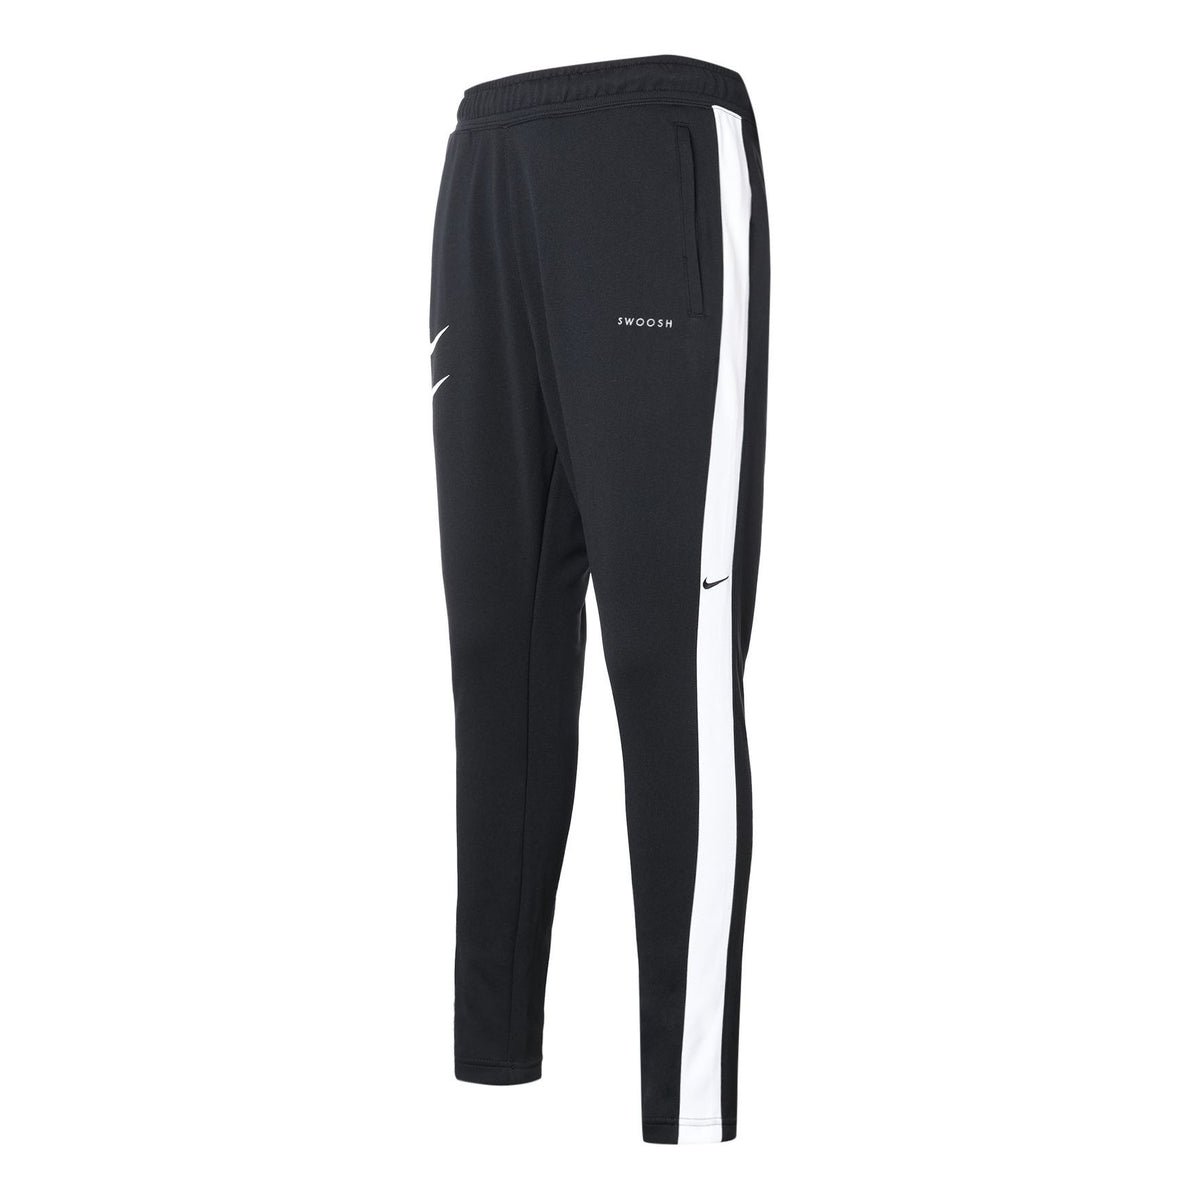 Nike Sportswear Swoosh Retro Sports Pants Black CJ4874-010 - KICKS CREW